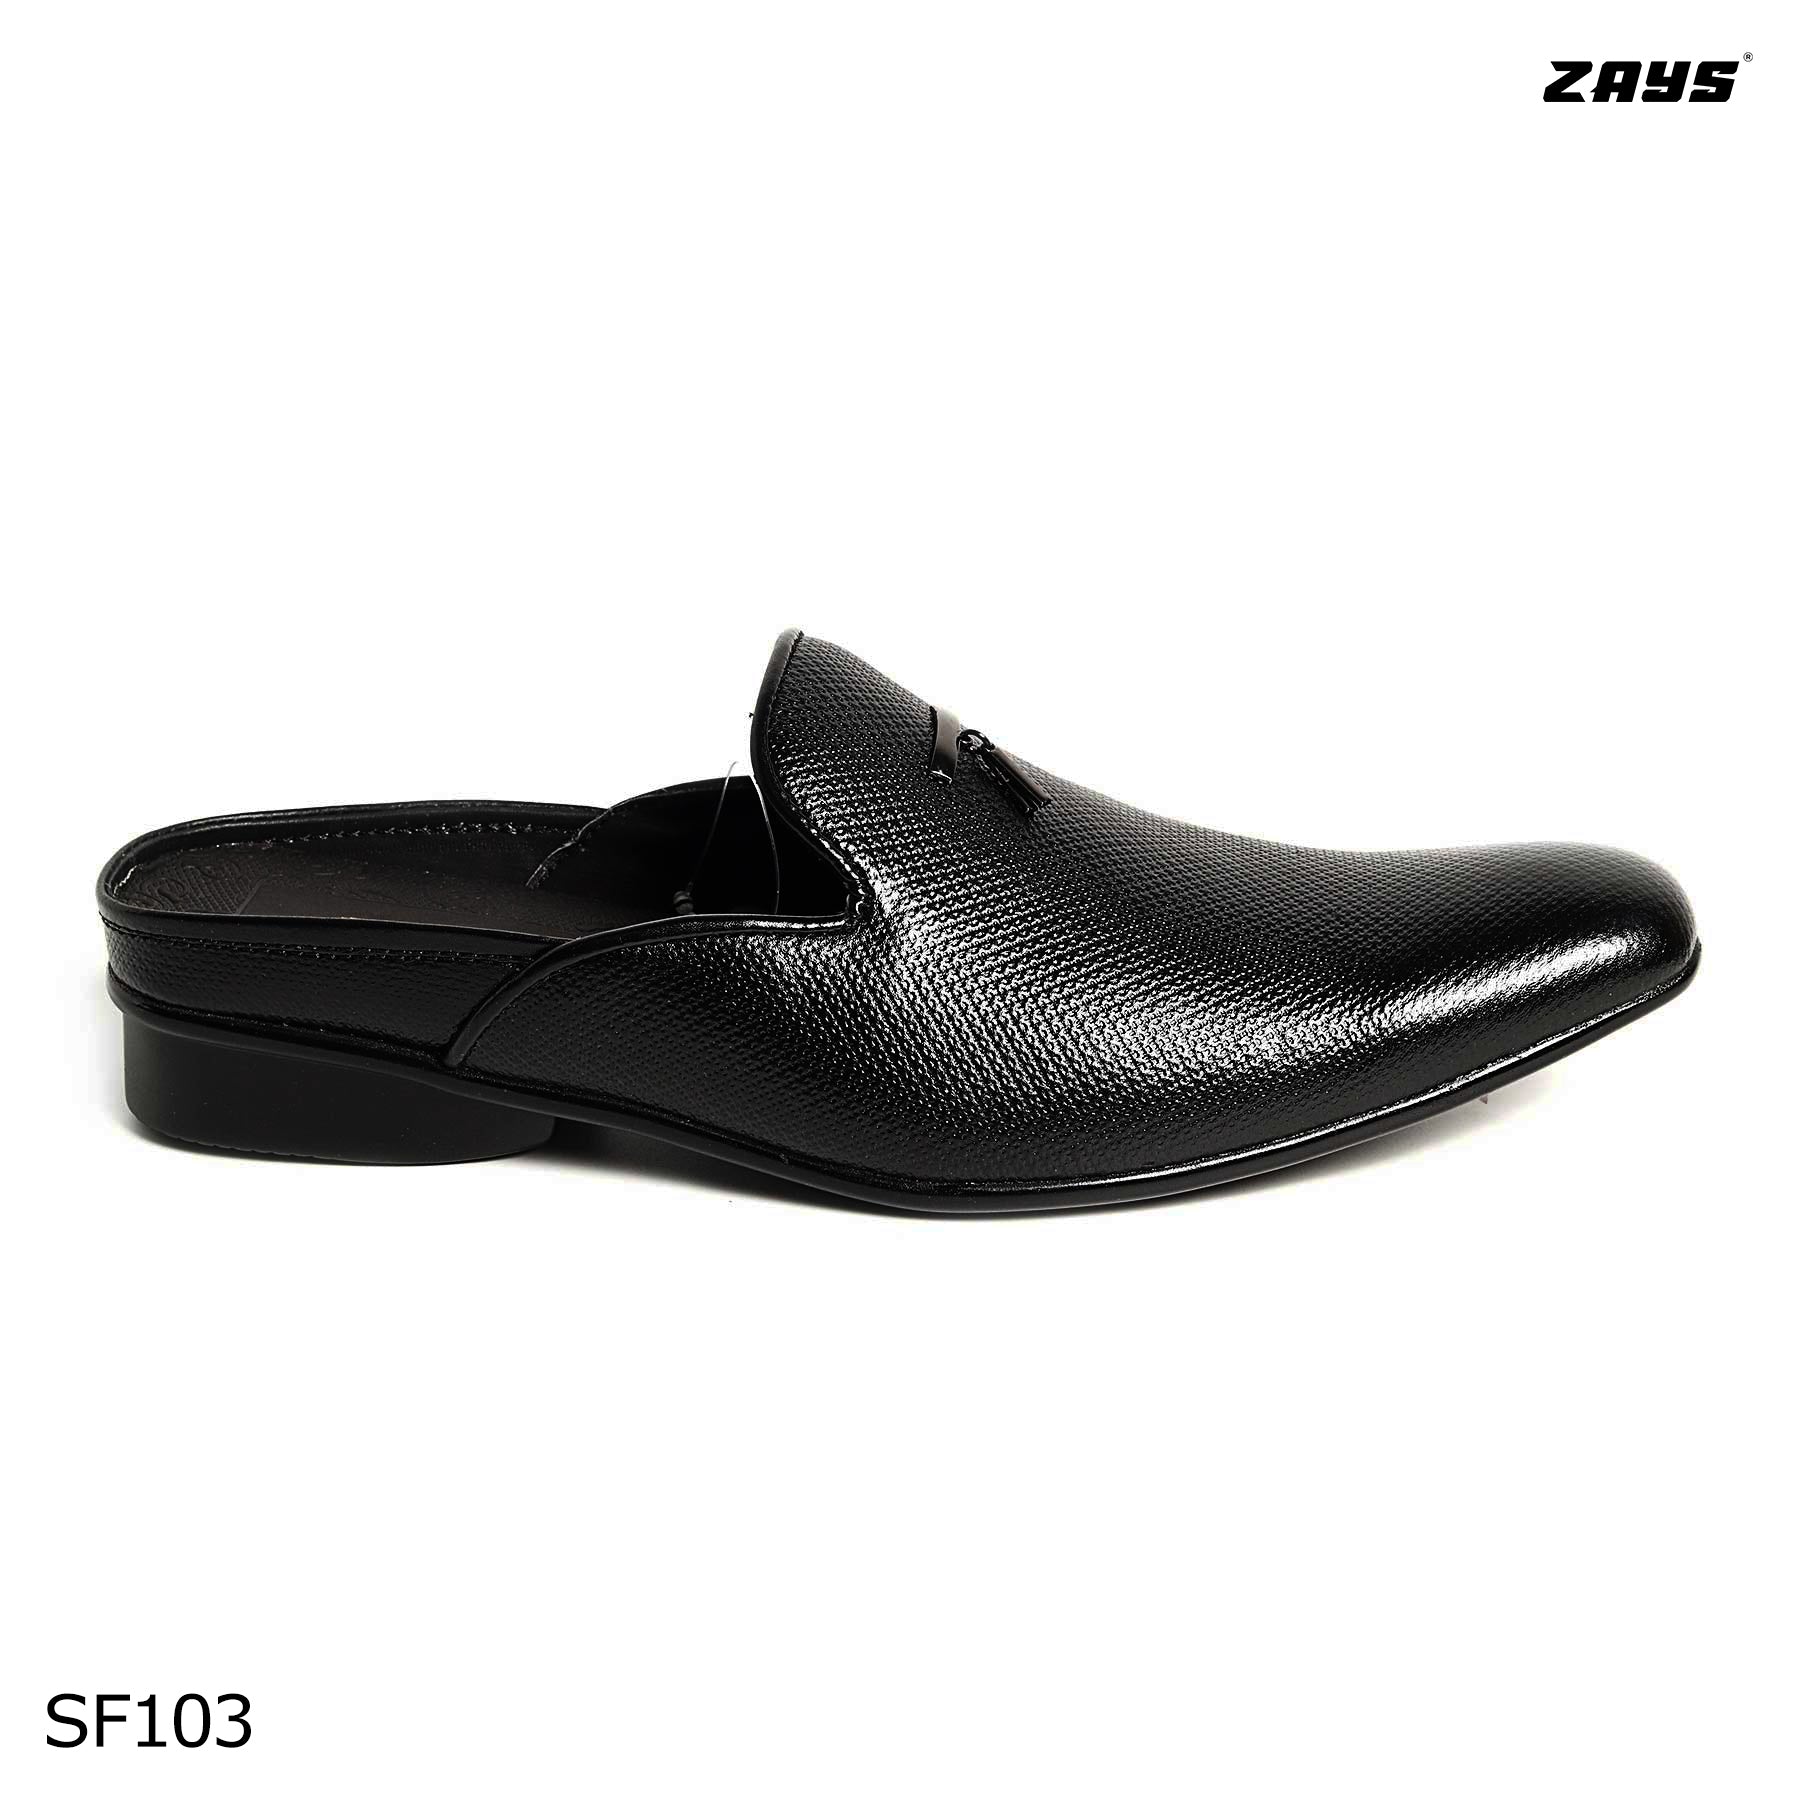 Zays Leather Premium Half Shoe For Men (Black) - SF103